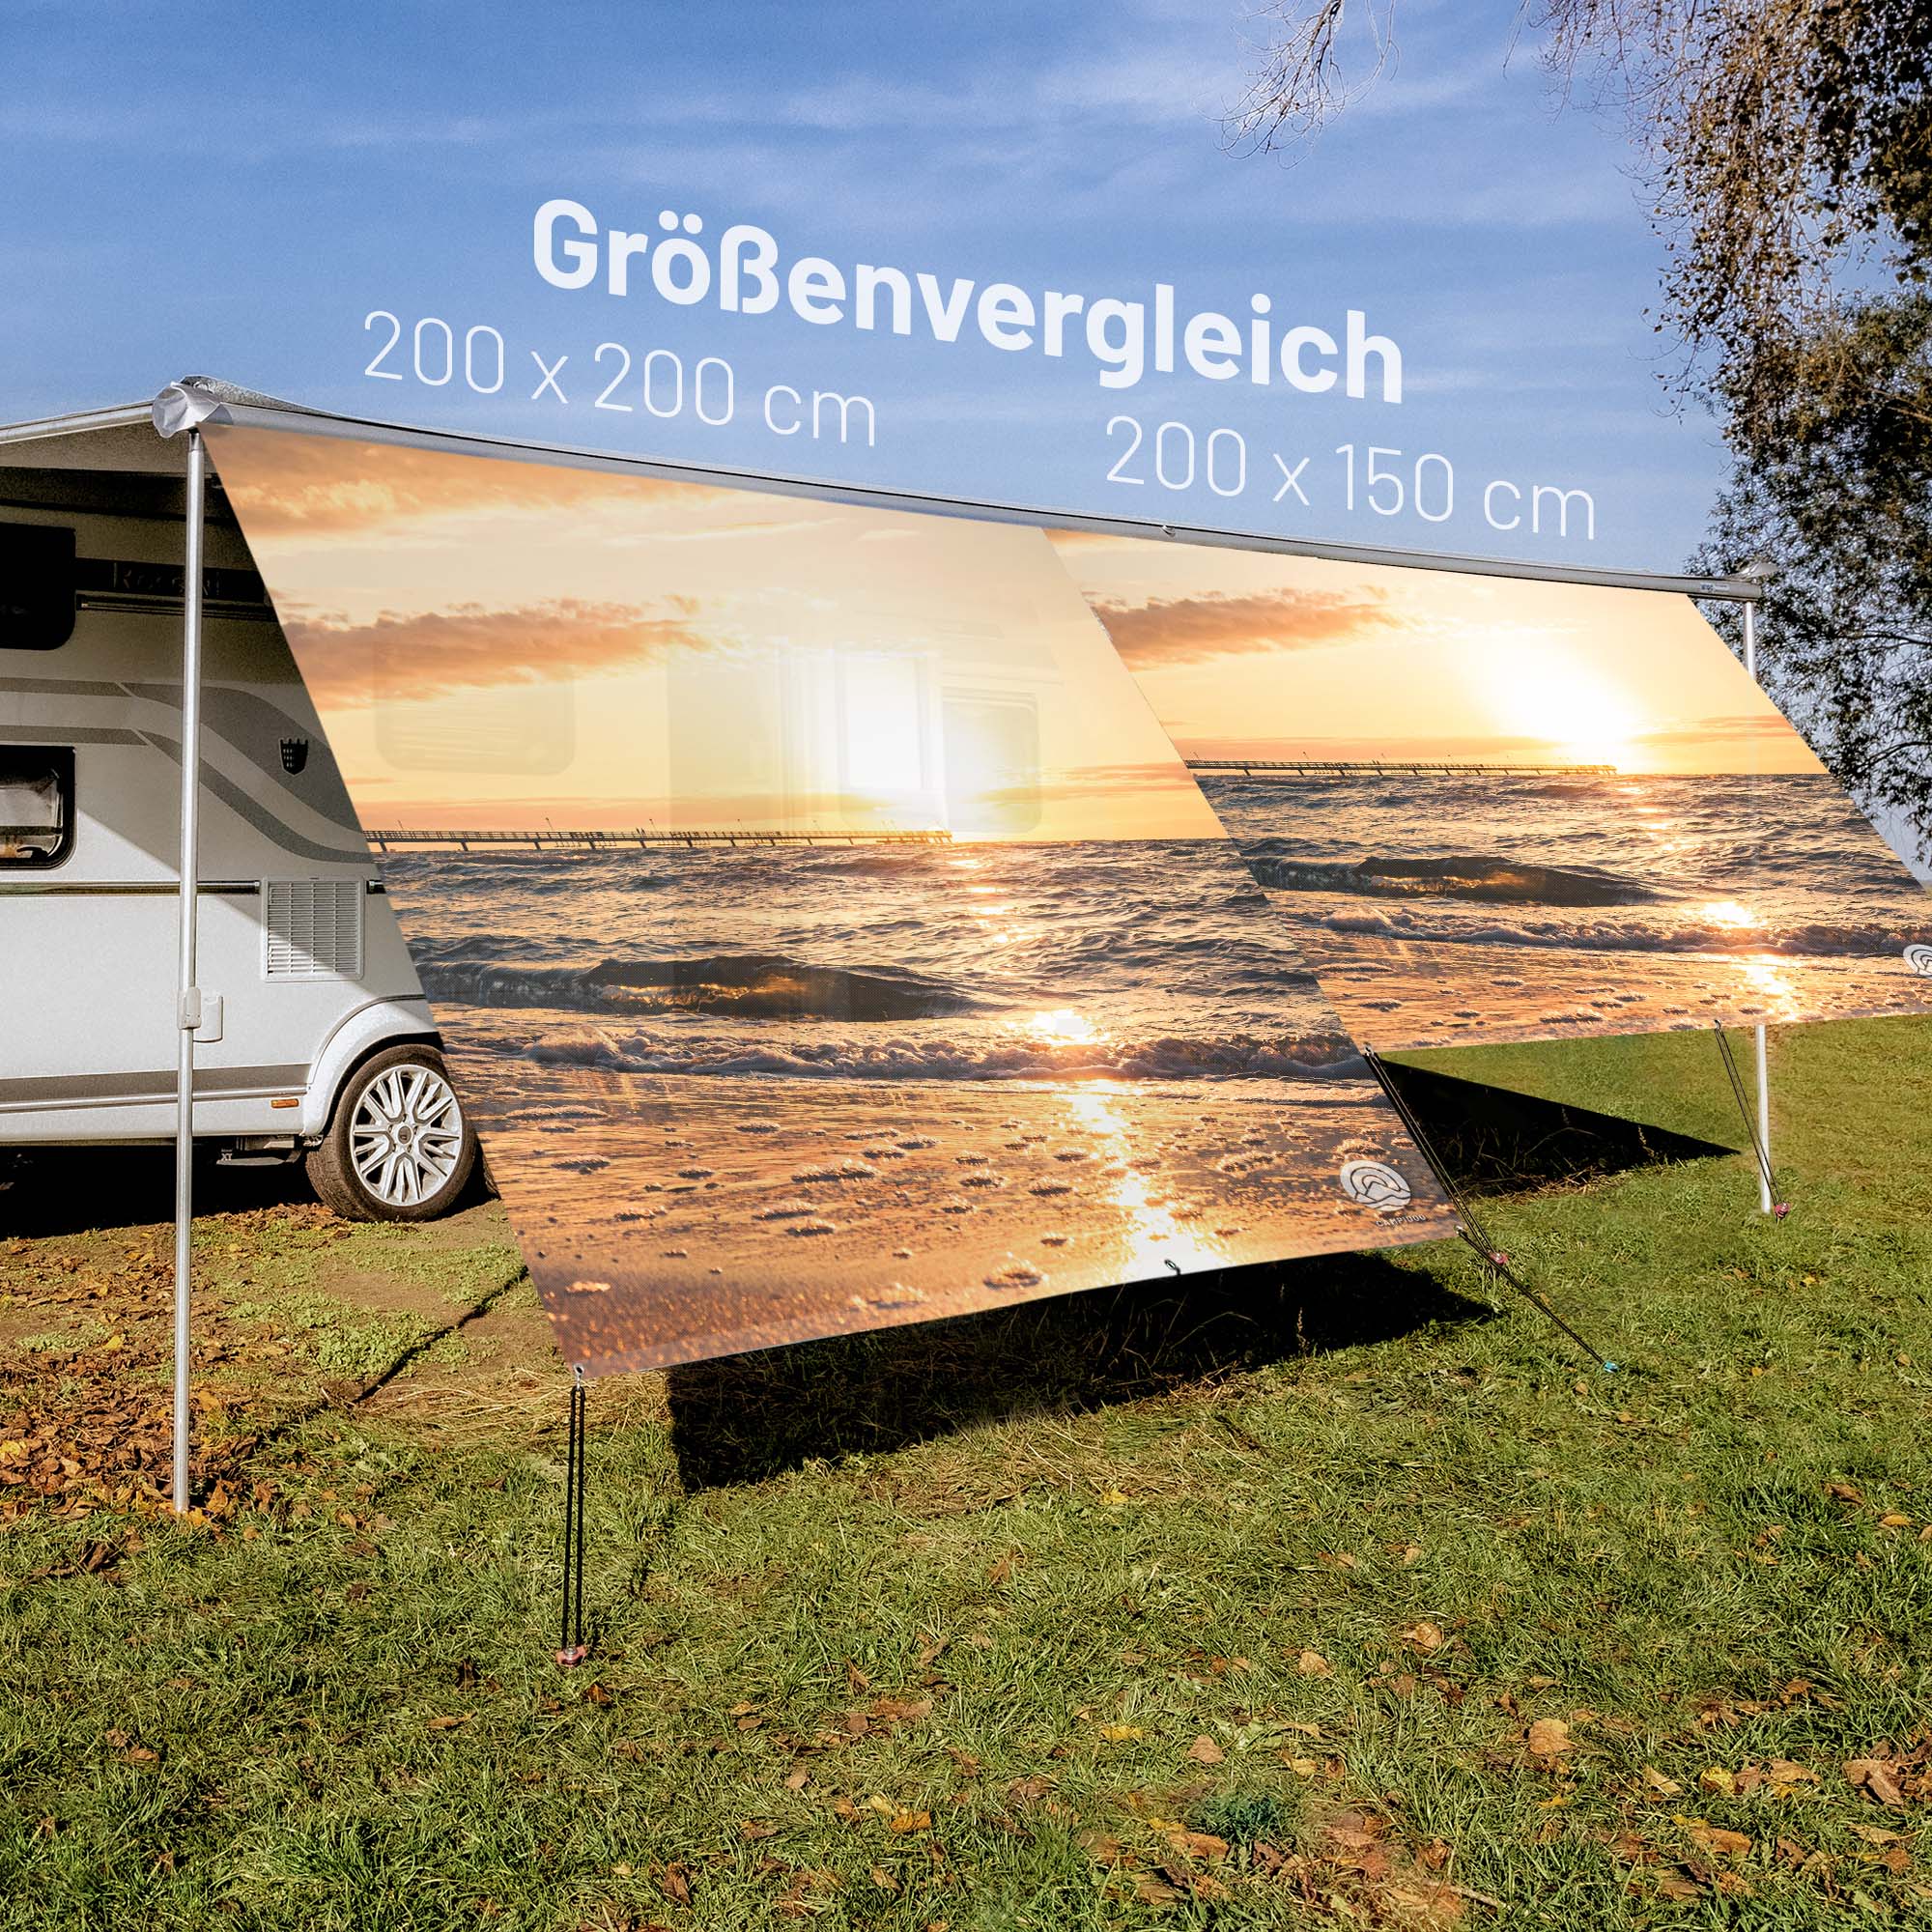 PVC Camping Sonnenschutz - Motiv SONNENUNTERGANG MIT SEEBRÜCKE 150cm Hoch